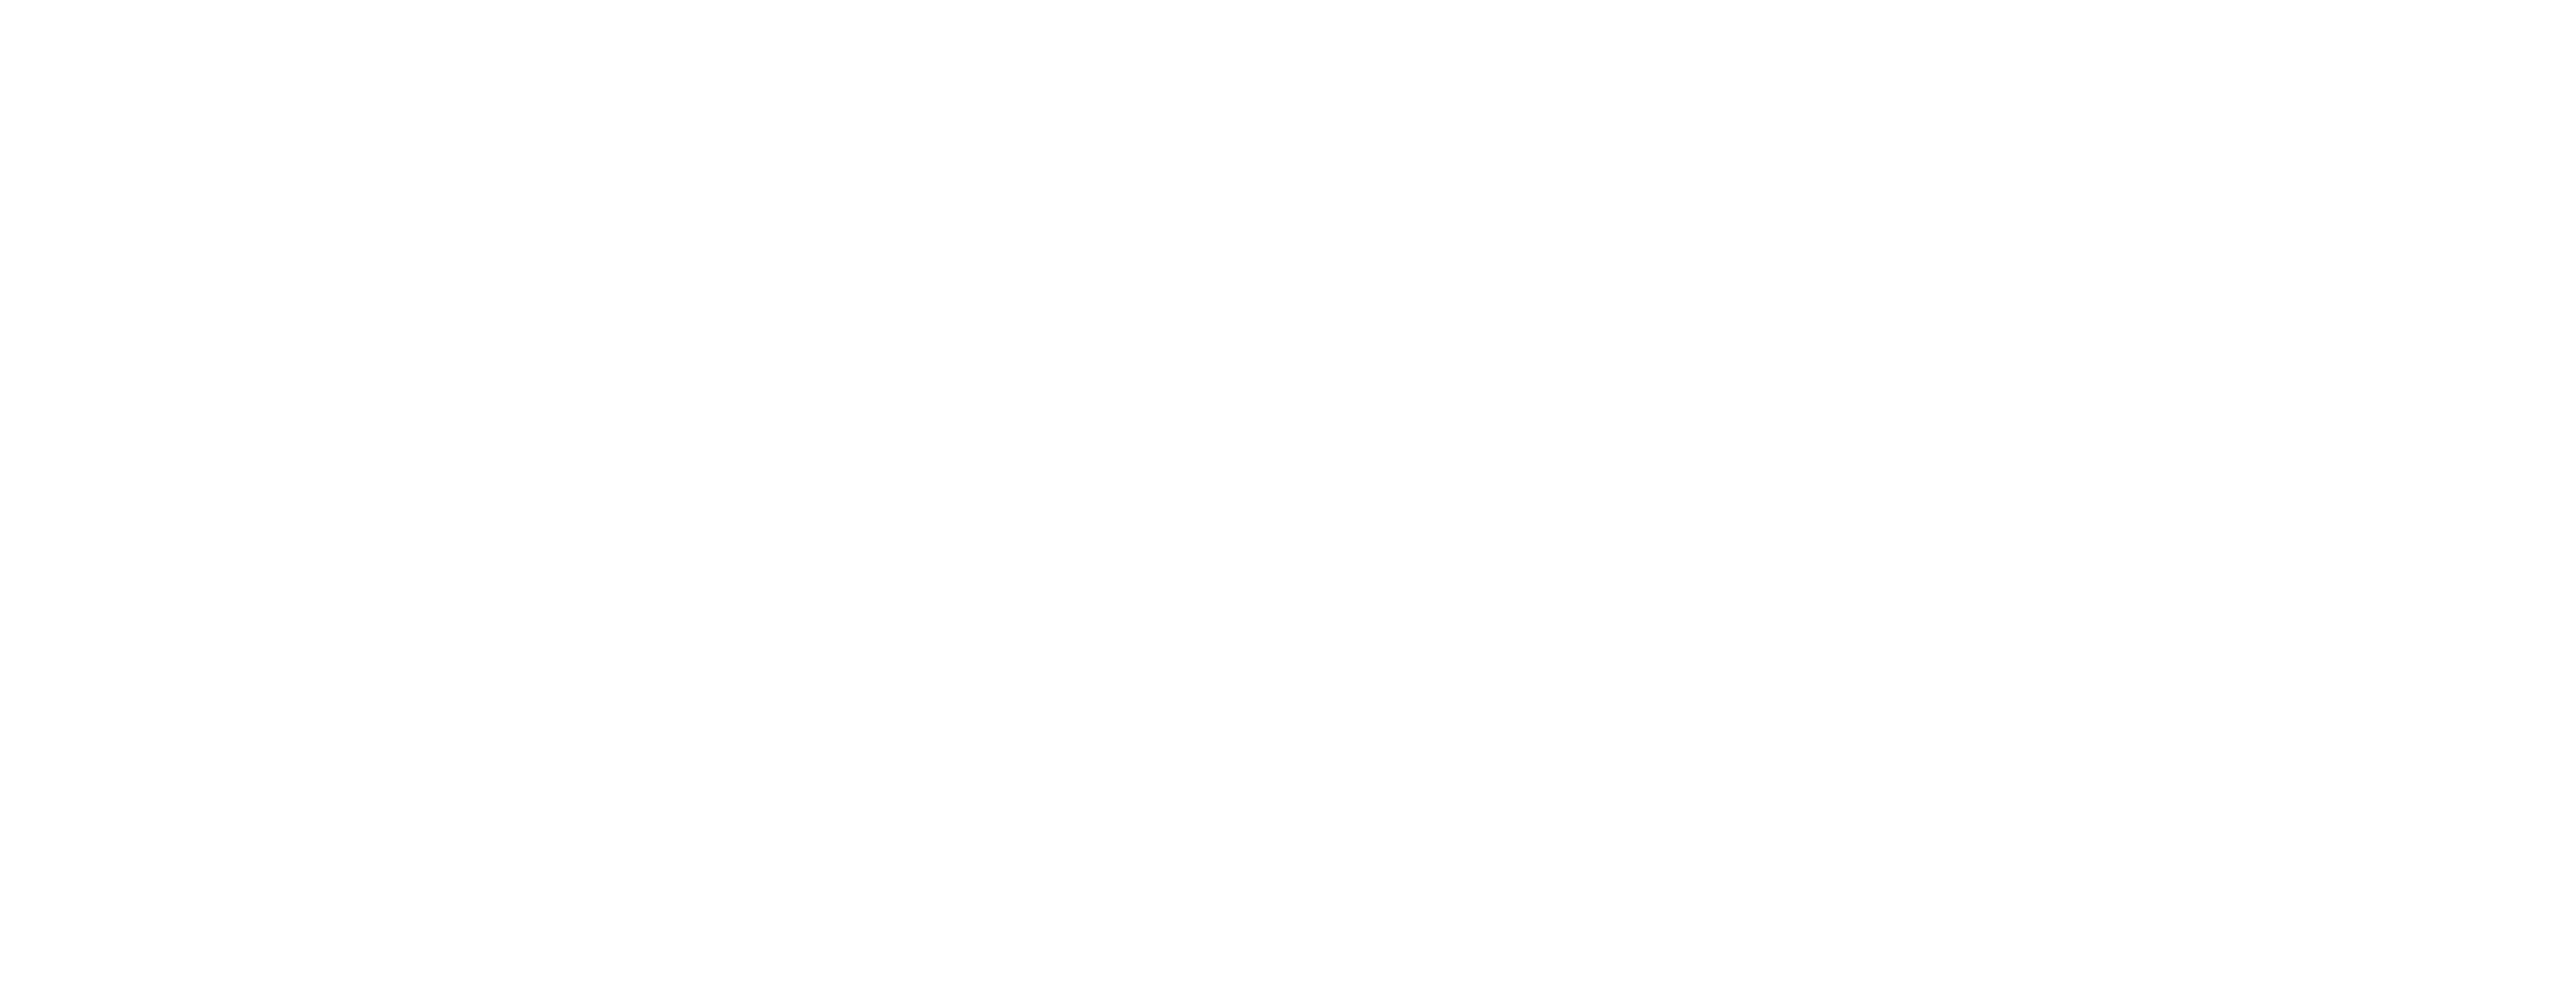 South Carolina Environmental Law Project (SCELP)